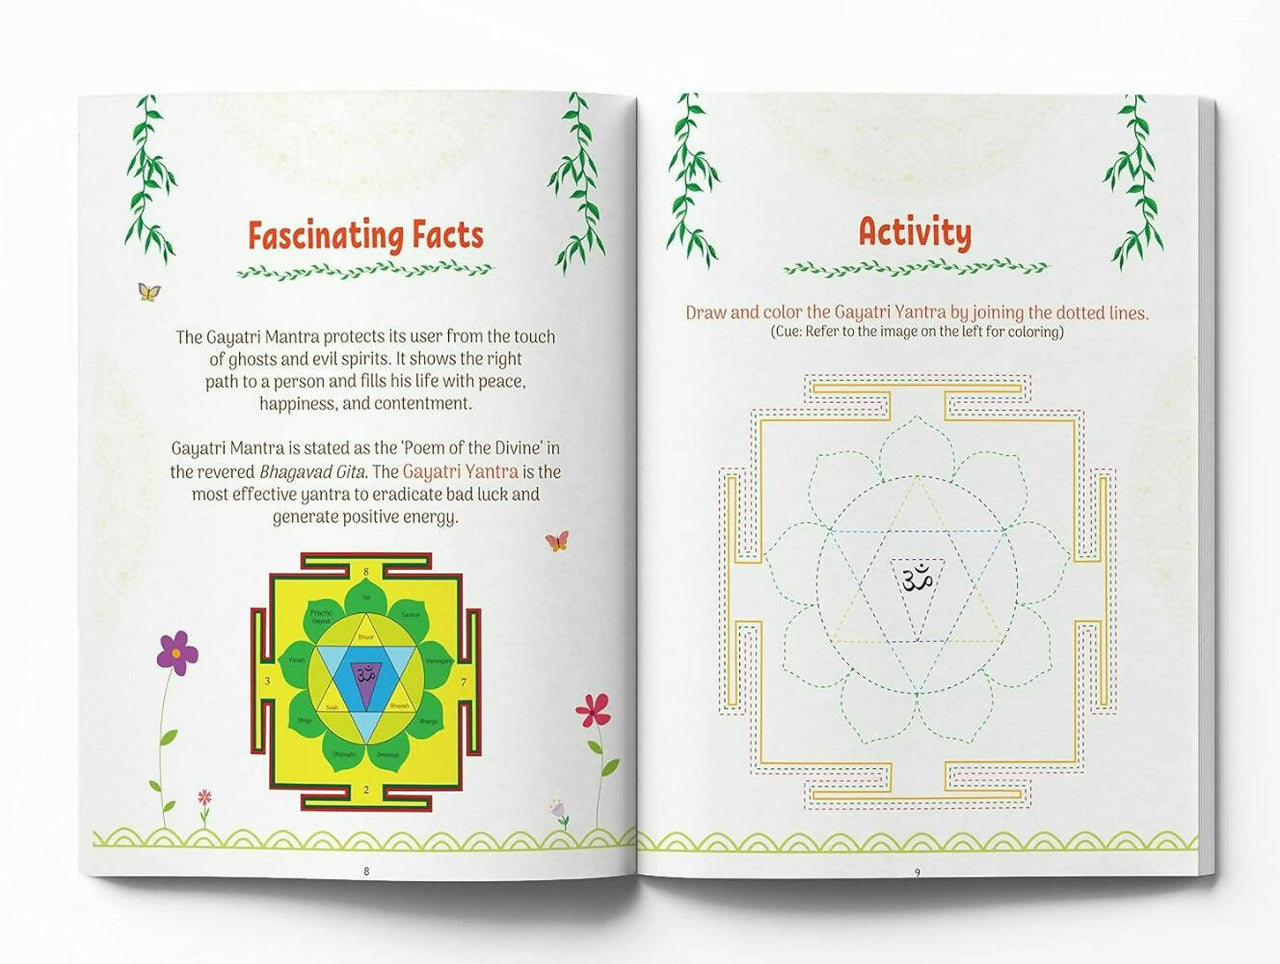 Shlokas And Mantras - Activity Book For Kids - Distacart